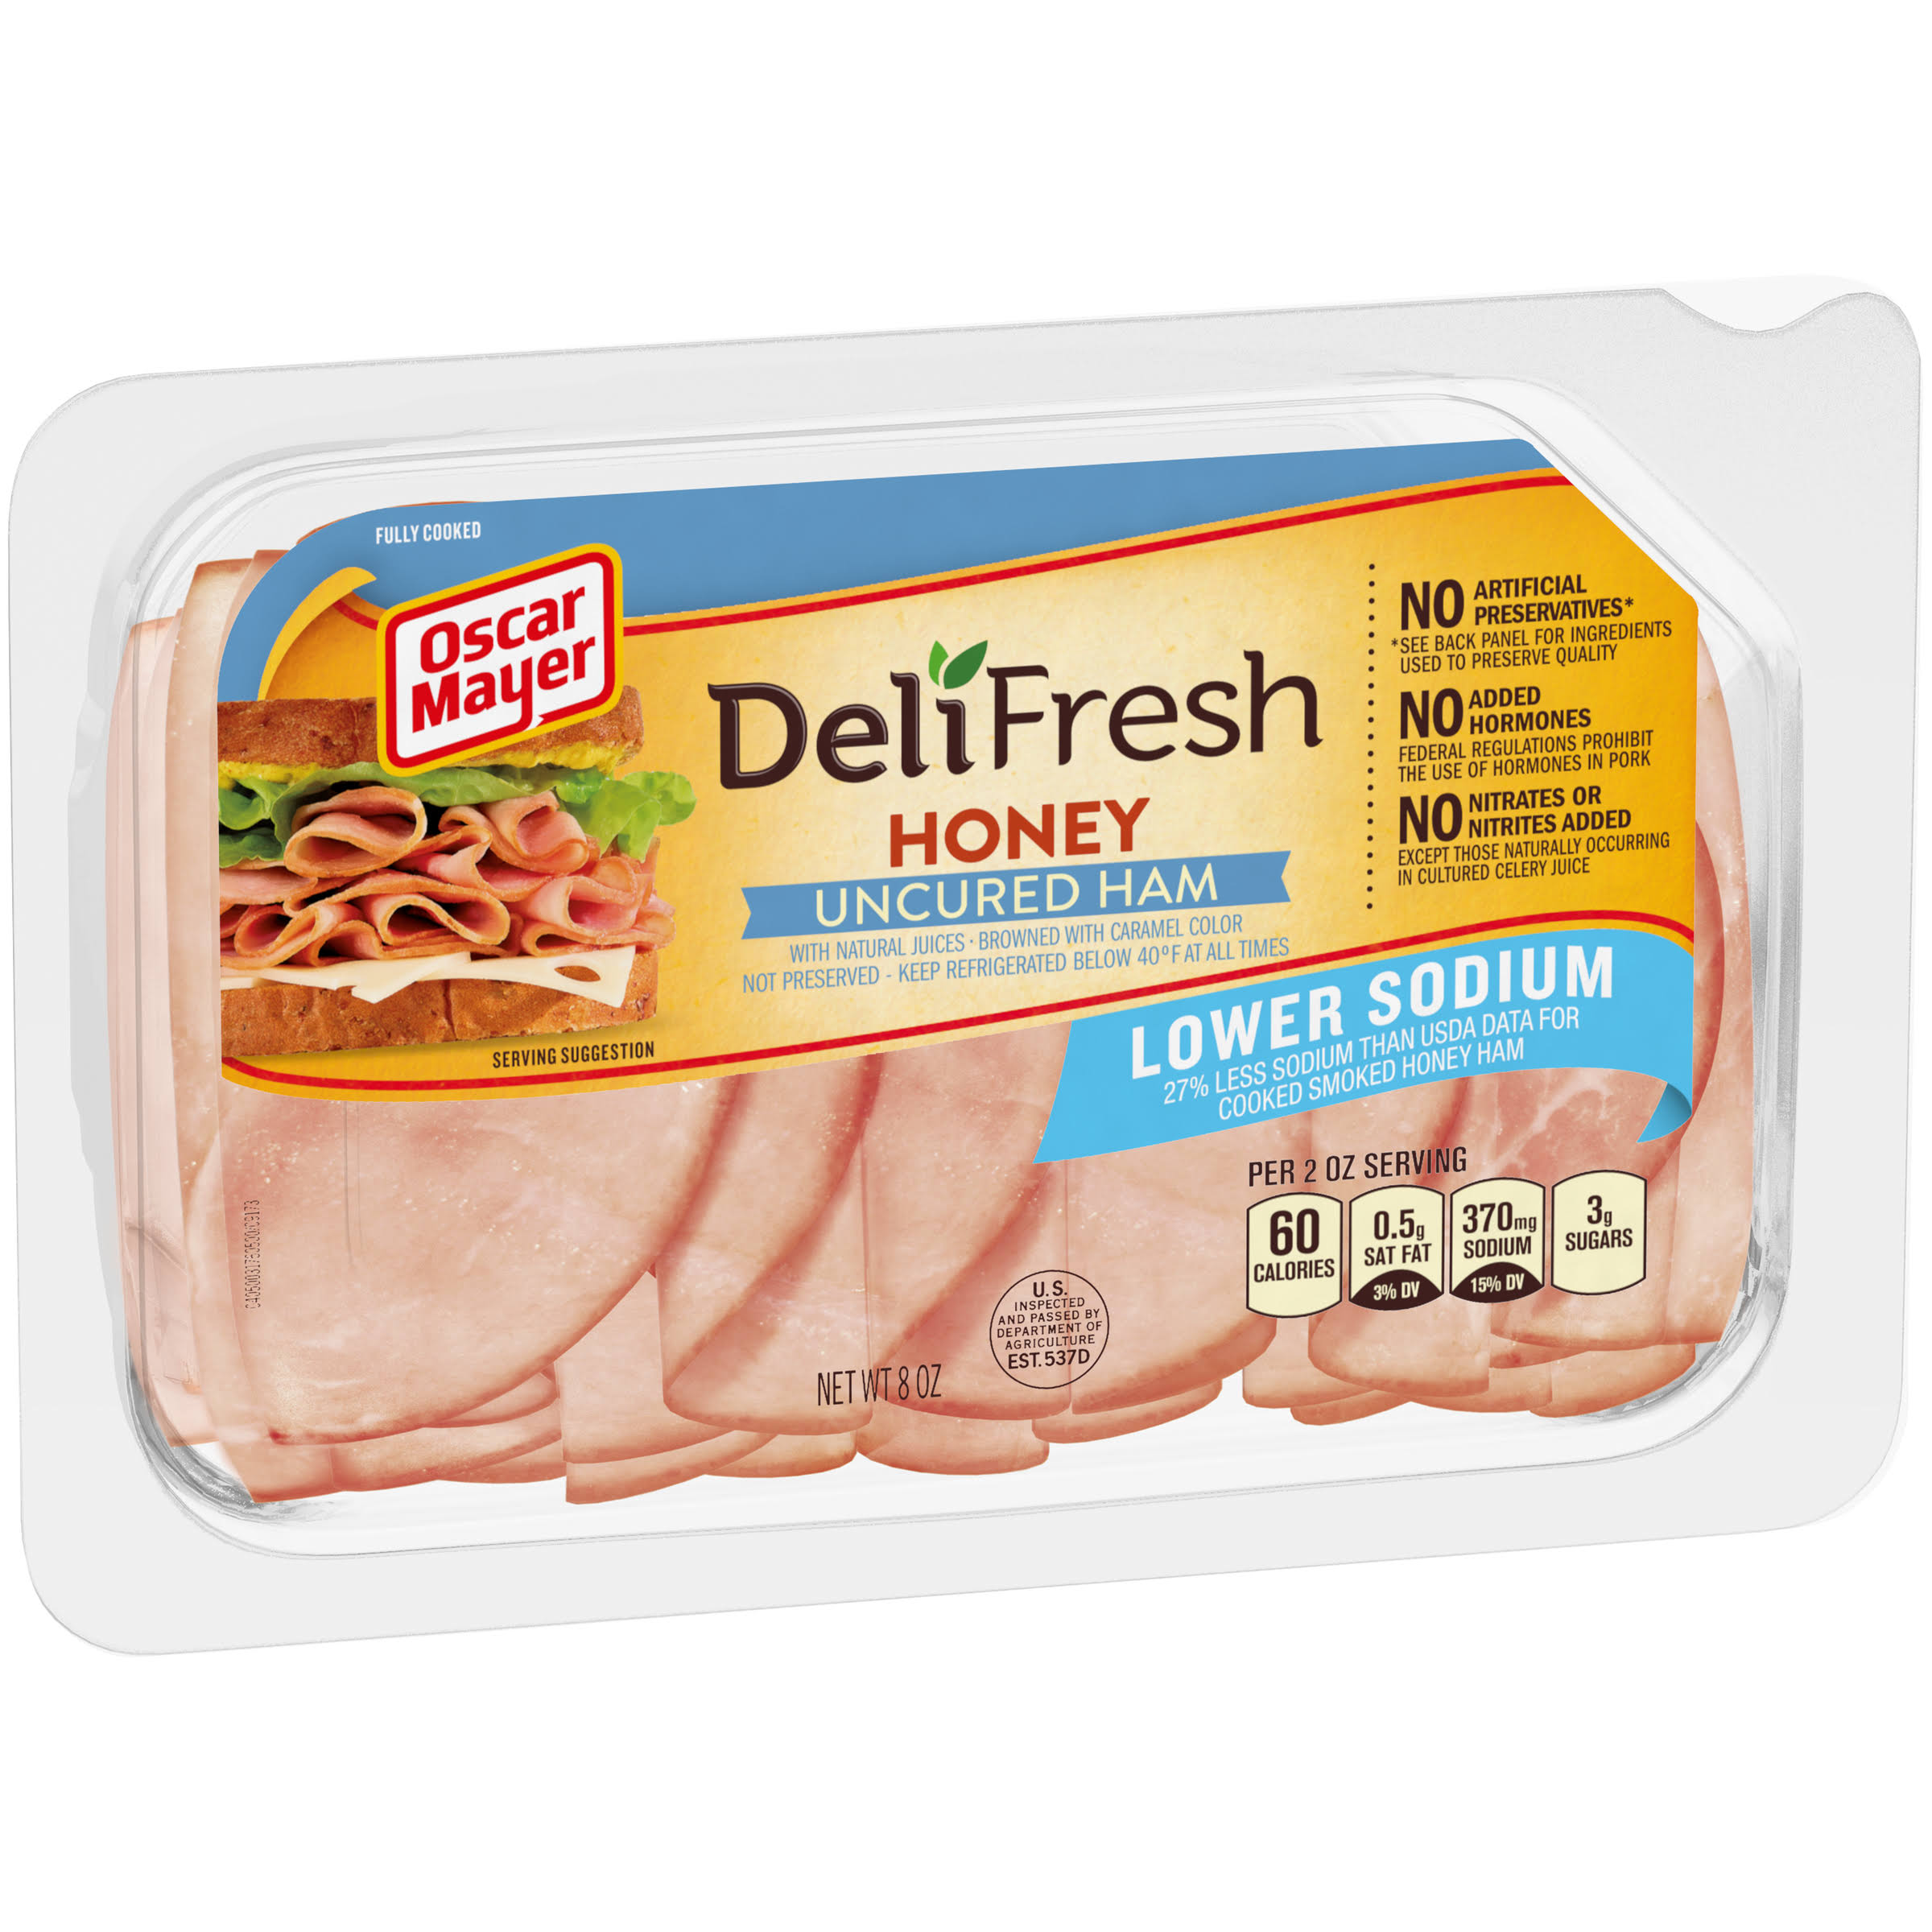 Oscar Mayer Deli Fresh Ham, Uncured, Lower Sodium, Honey - 8 oz